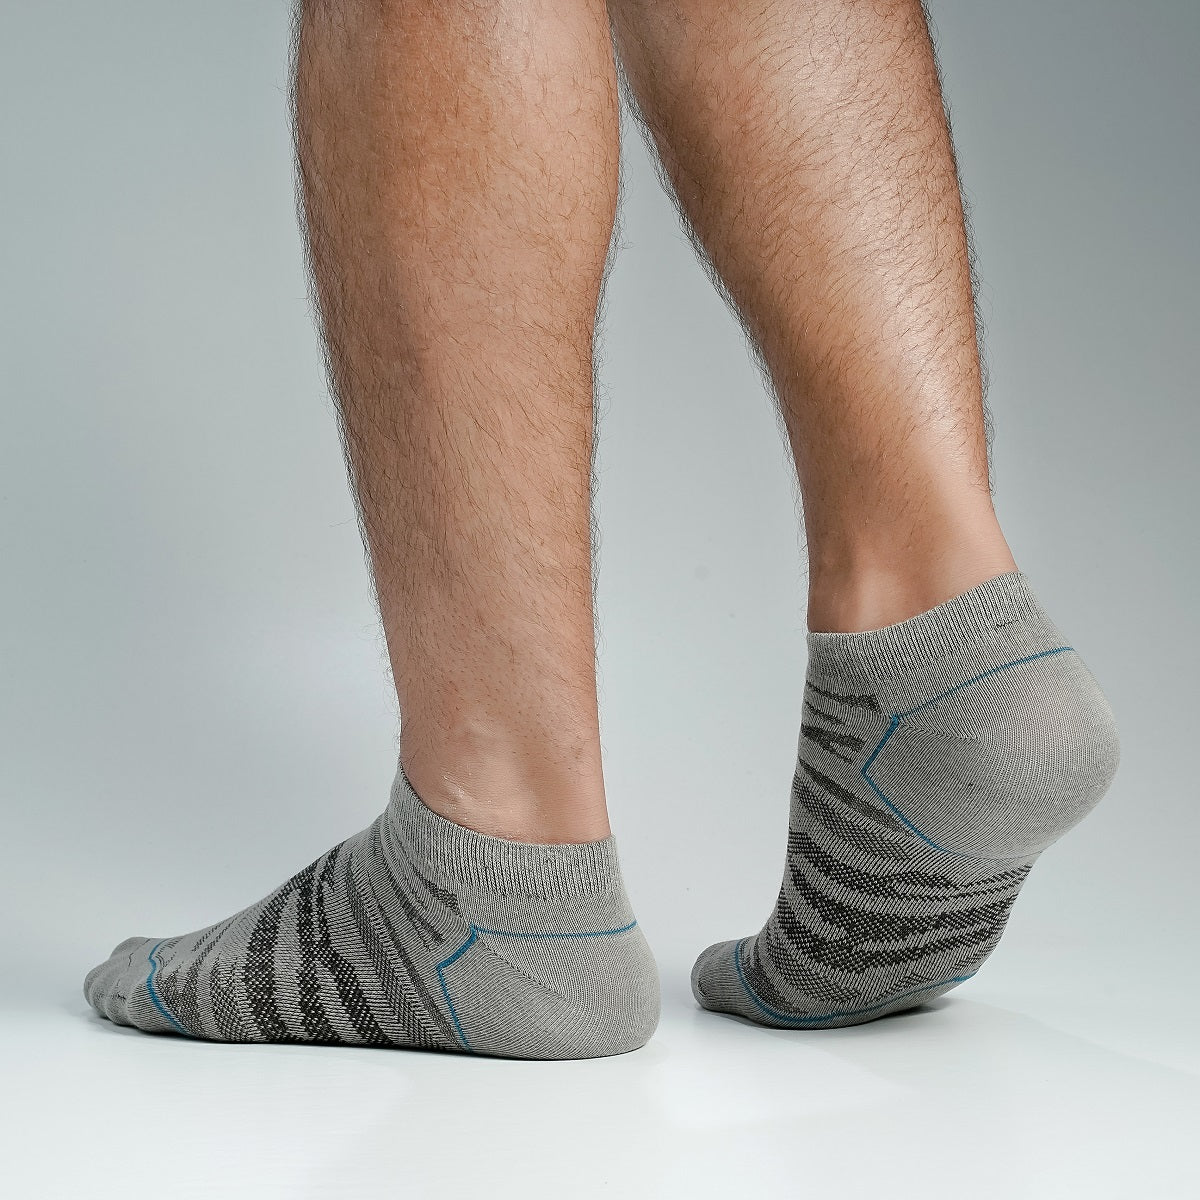 Kmalion Ankle Socks For Men